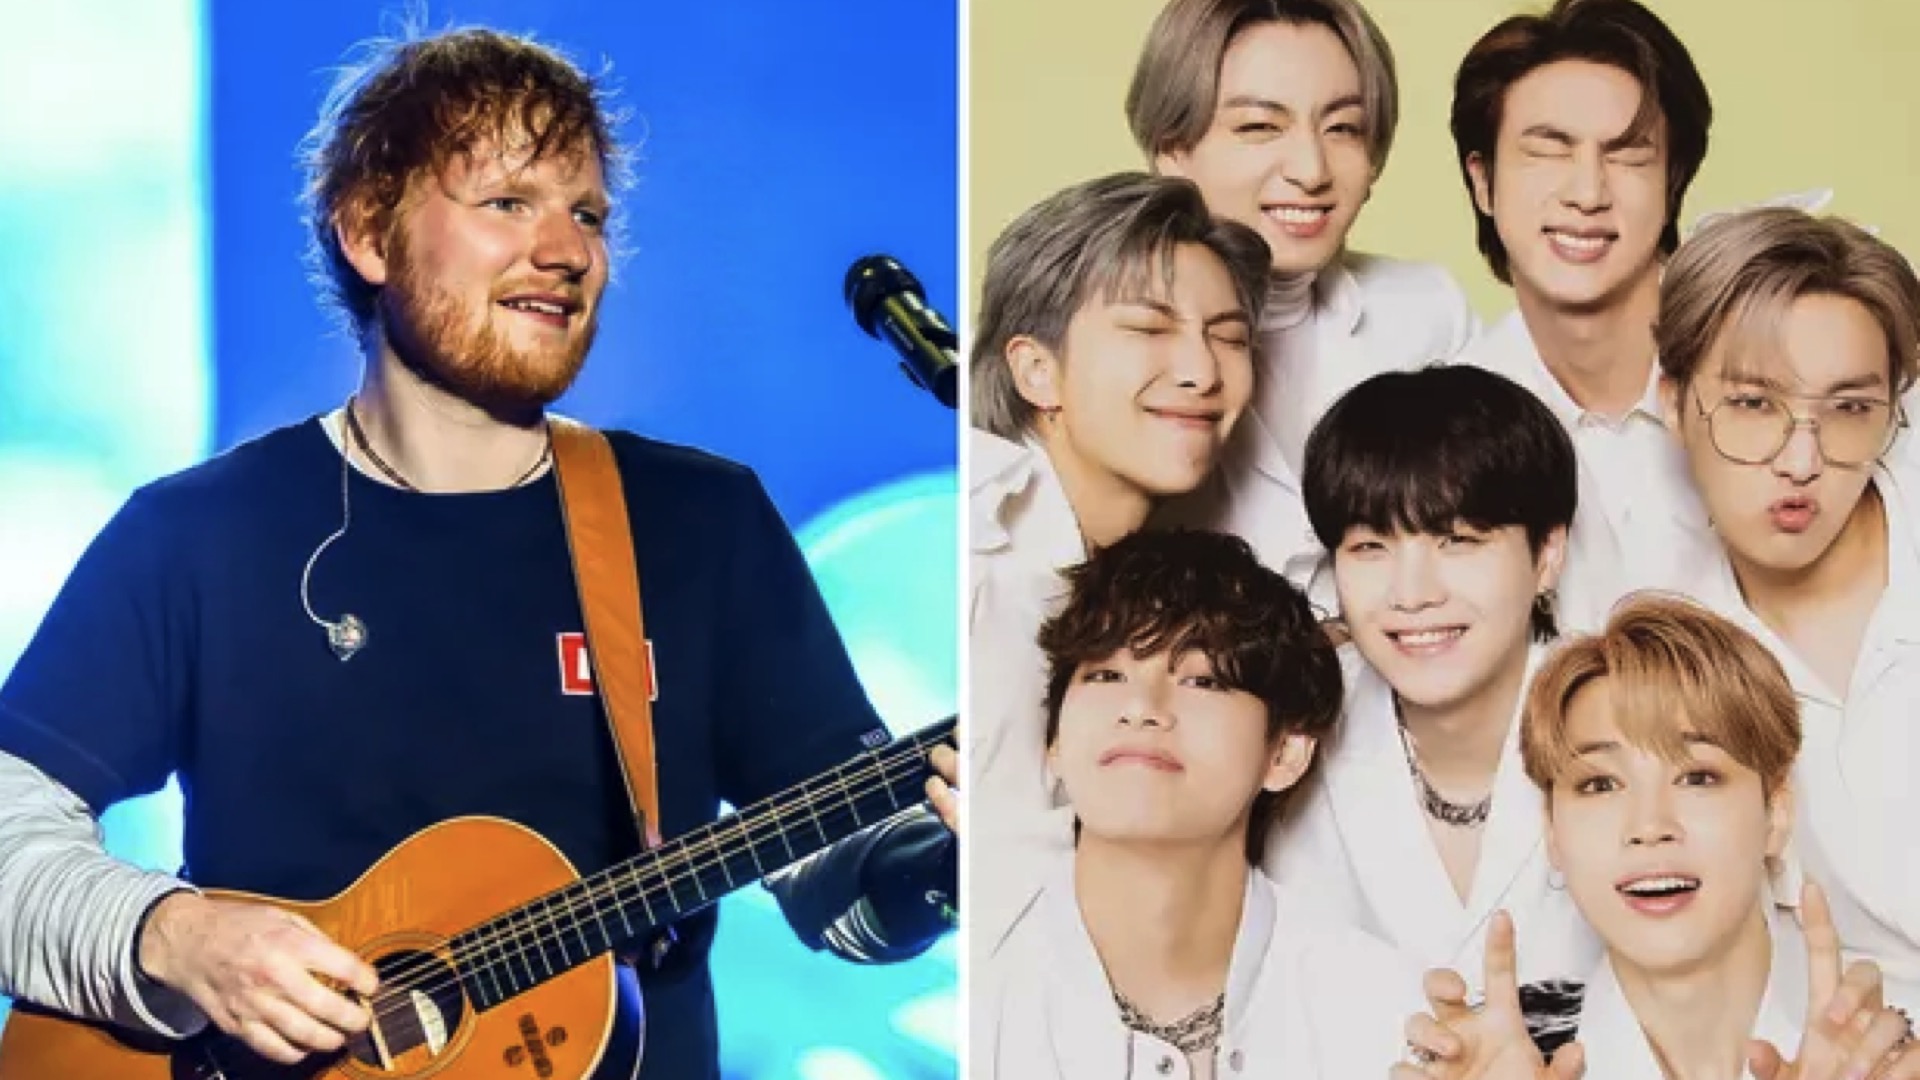 Ed Sheeran confirma que irá participar de música do BTS